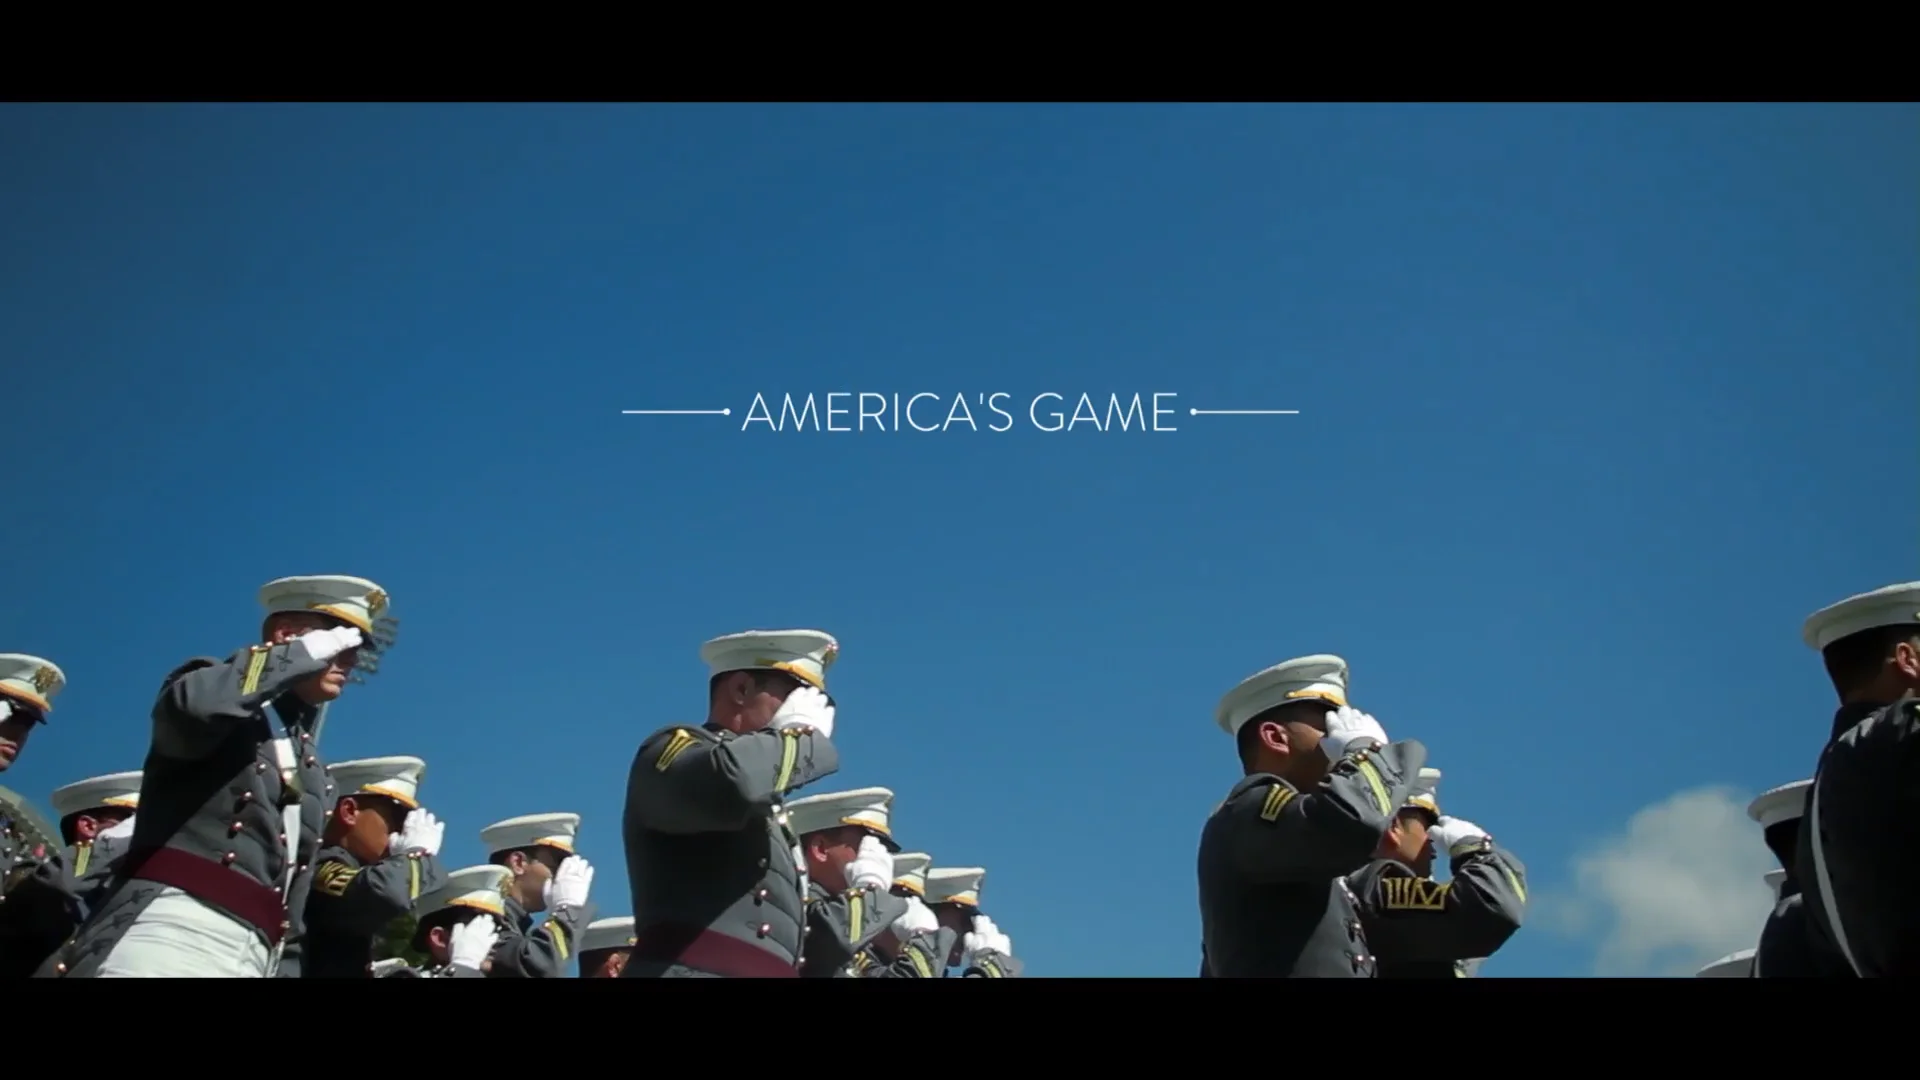 Super Bowl LV: Stand by Me (feat. Jennifer Hudson) on Vimeo